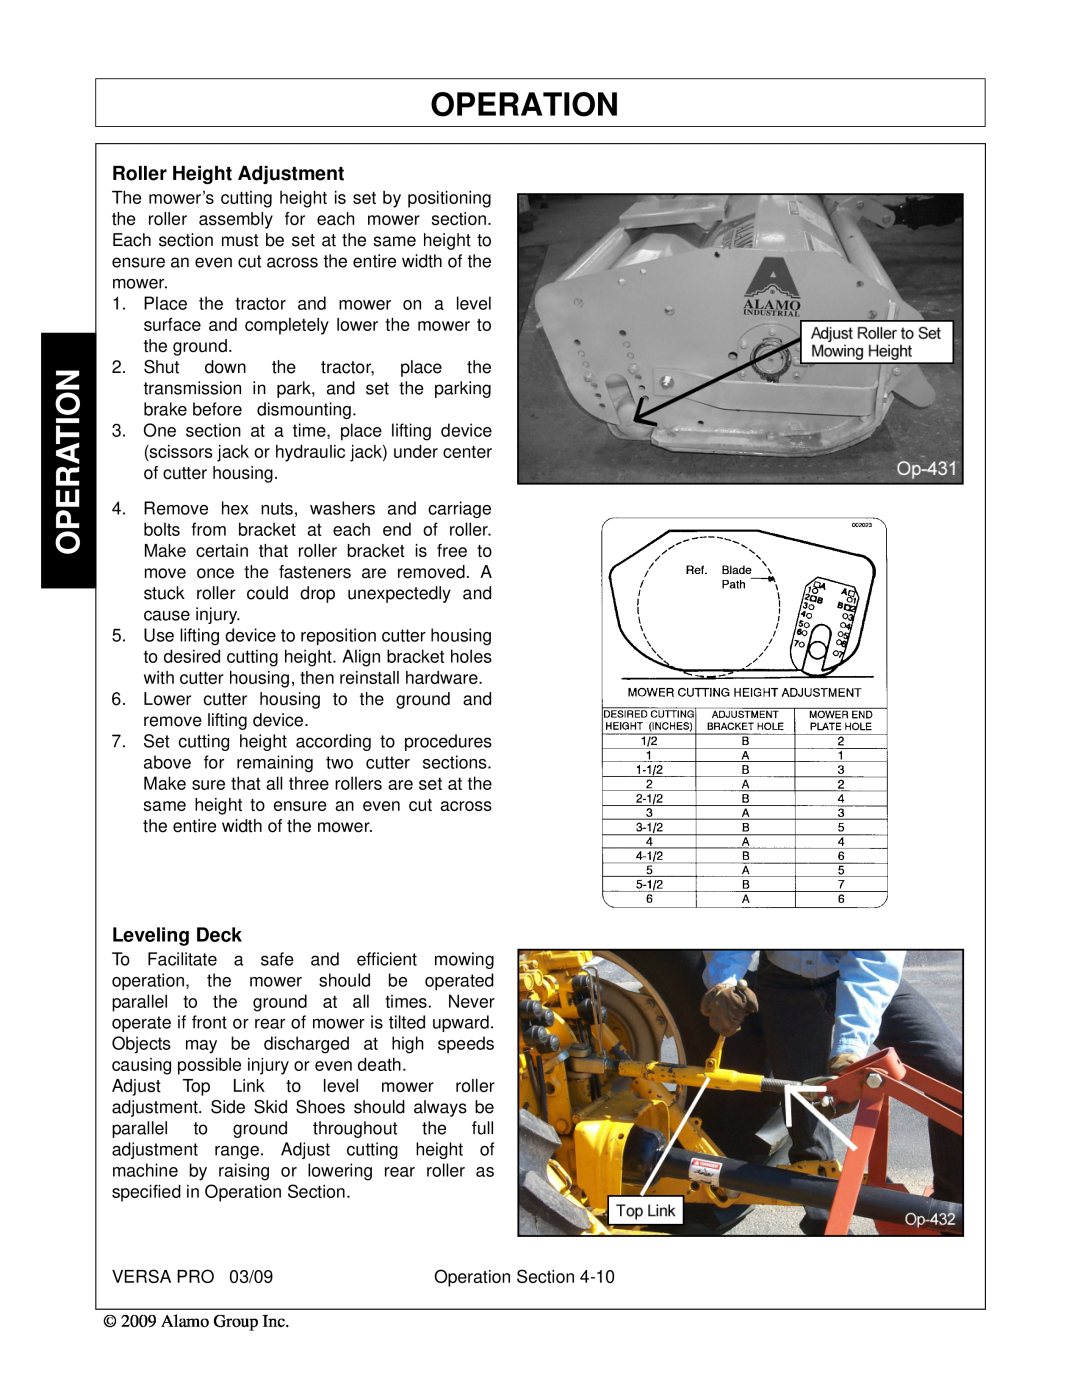 Alamo 803350C manual Operation, Roller Height Adjustment, Leveling Deck 